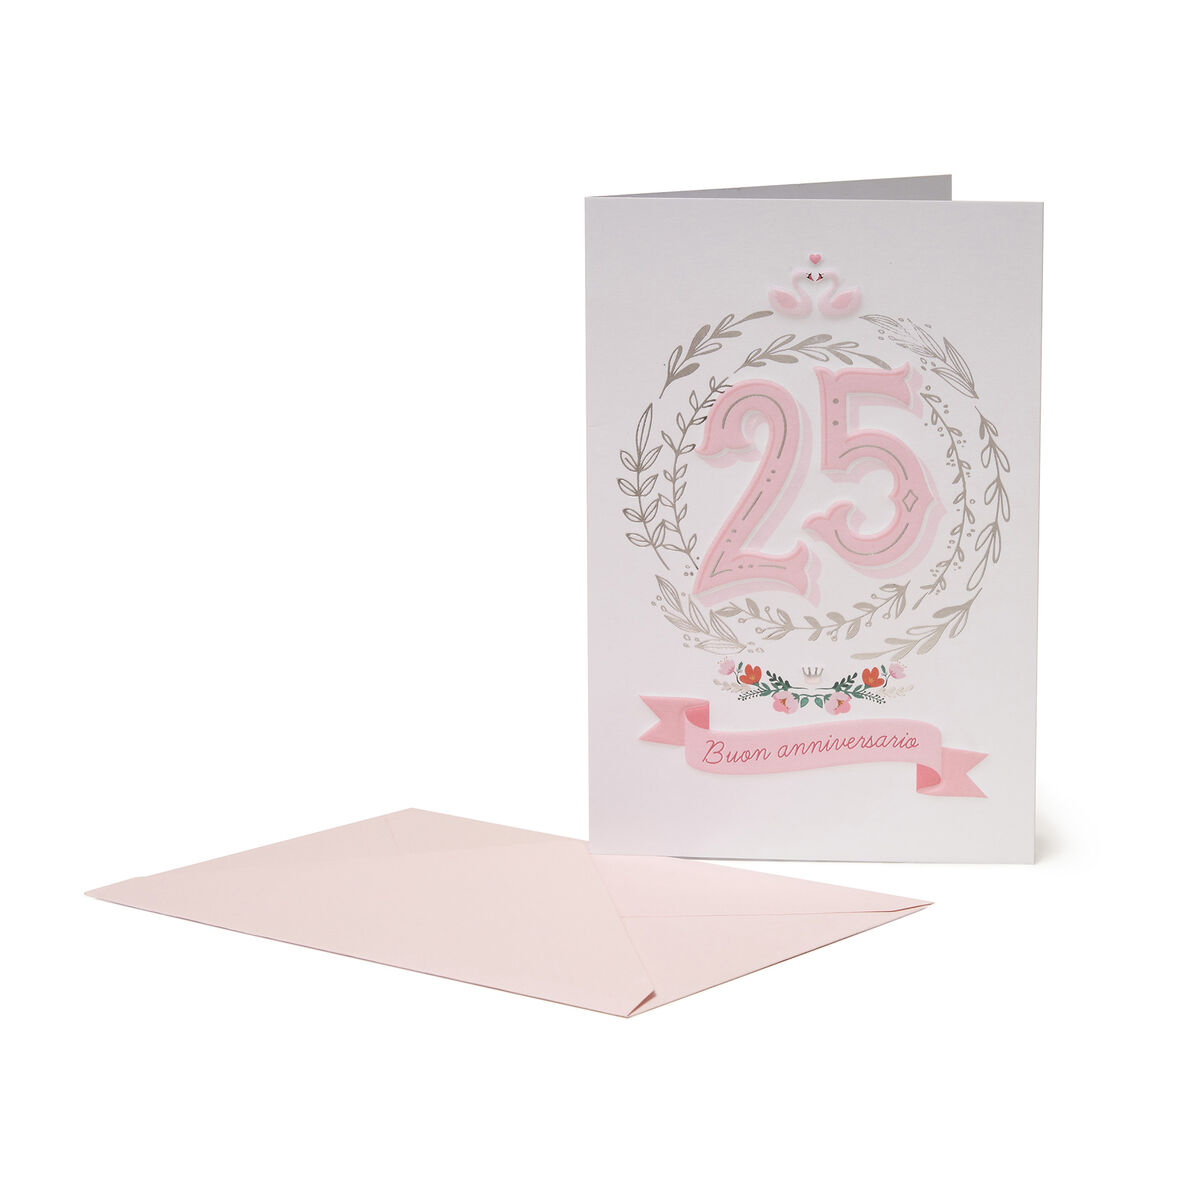 Greeting Card - Anniversary - 25 Anni Insieme, , zoo